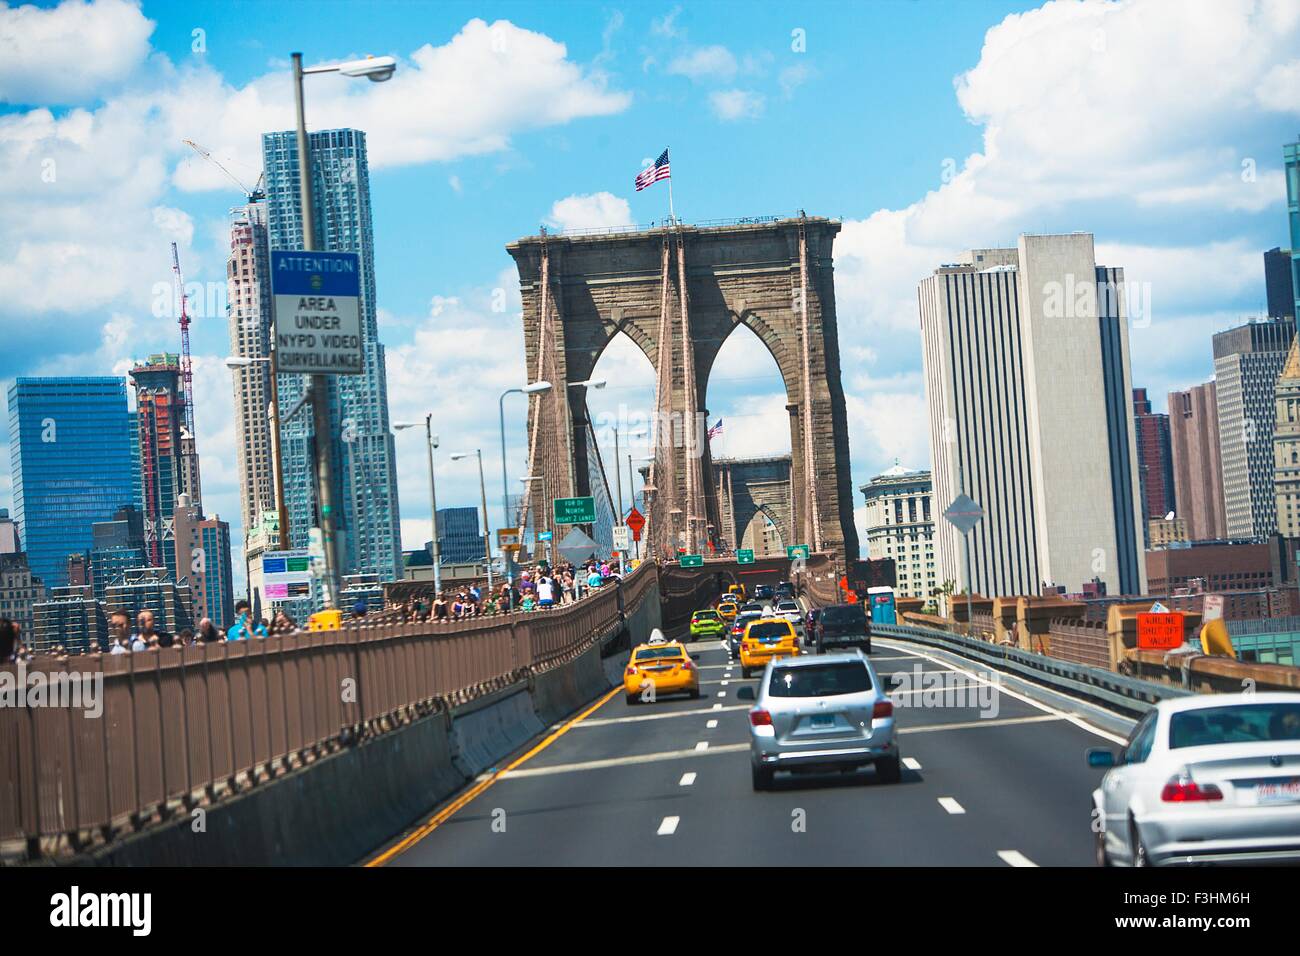 Le trafic traversant le pont de Brooklyn, Manhattan, New York, USA Banque D'Images